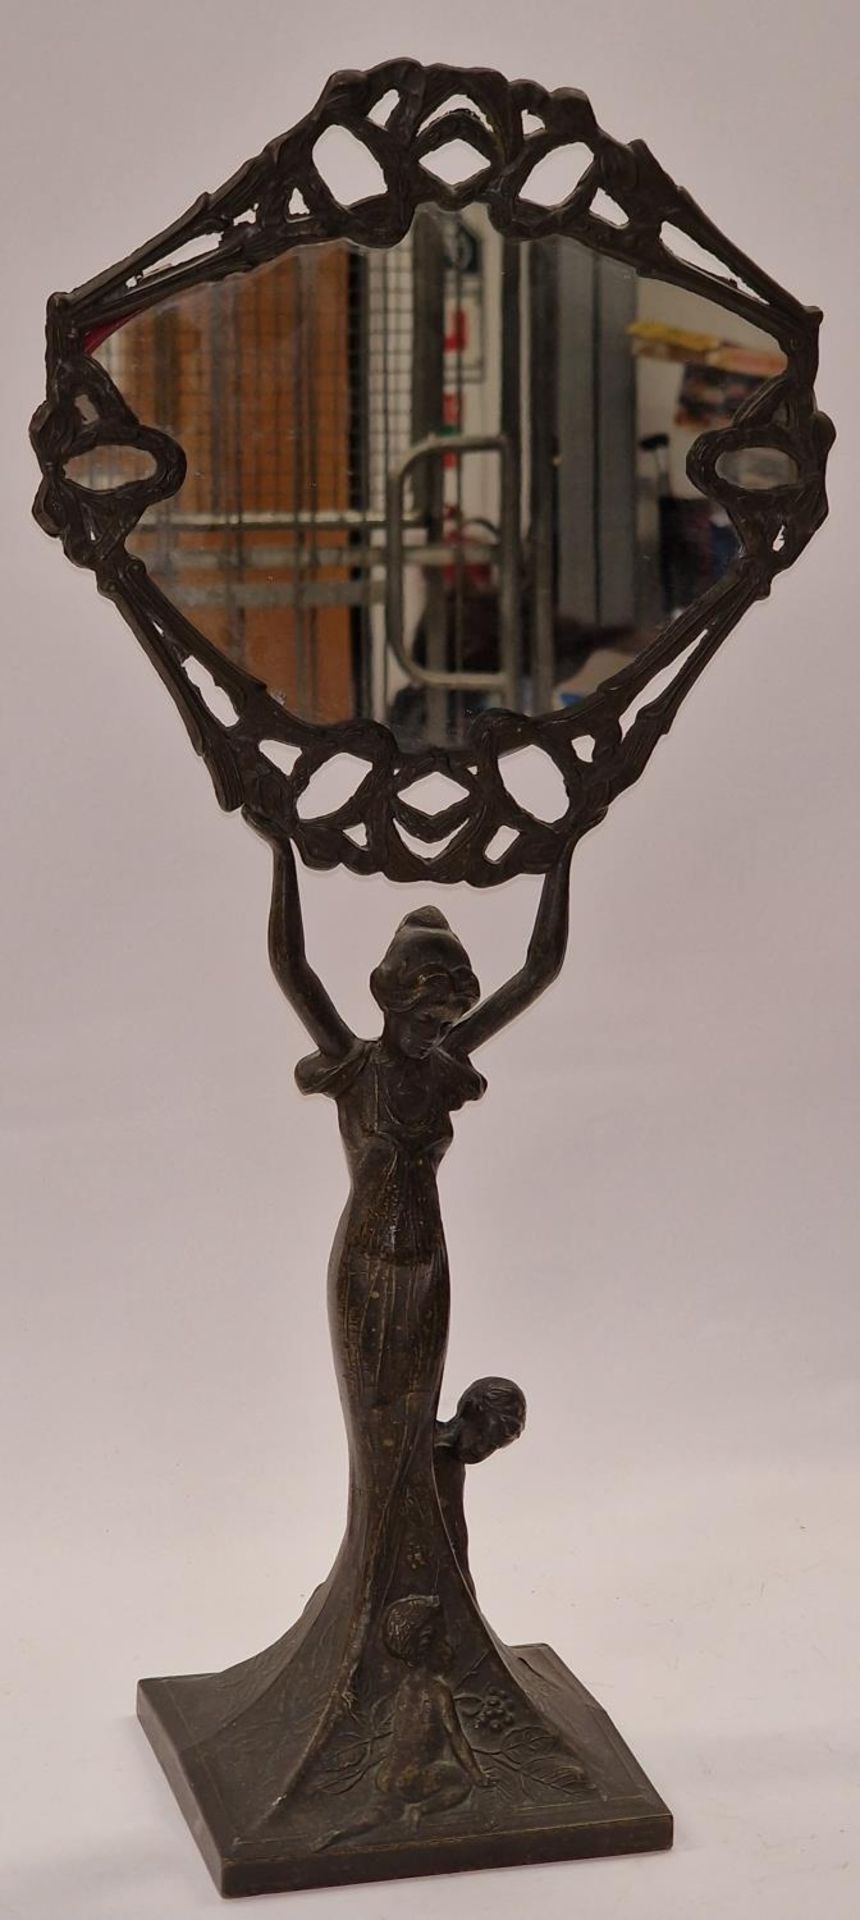 A decorative metal Art Nouveau style mirror depicting a lady 50cm tall.